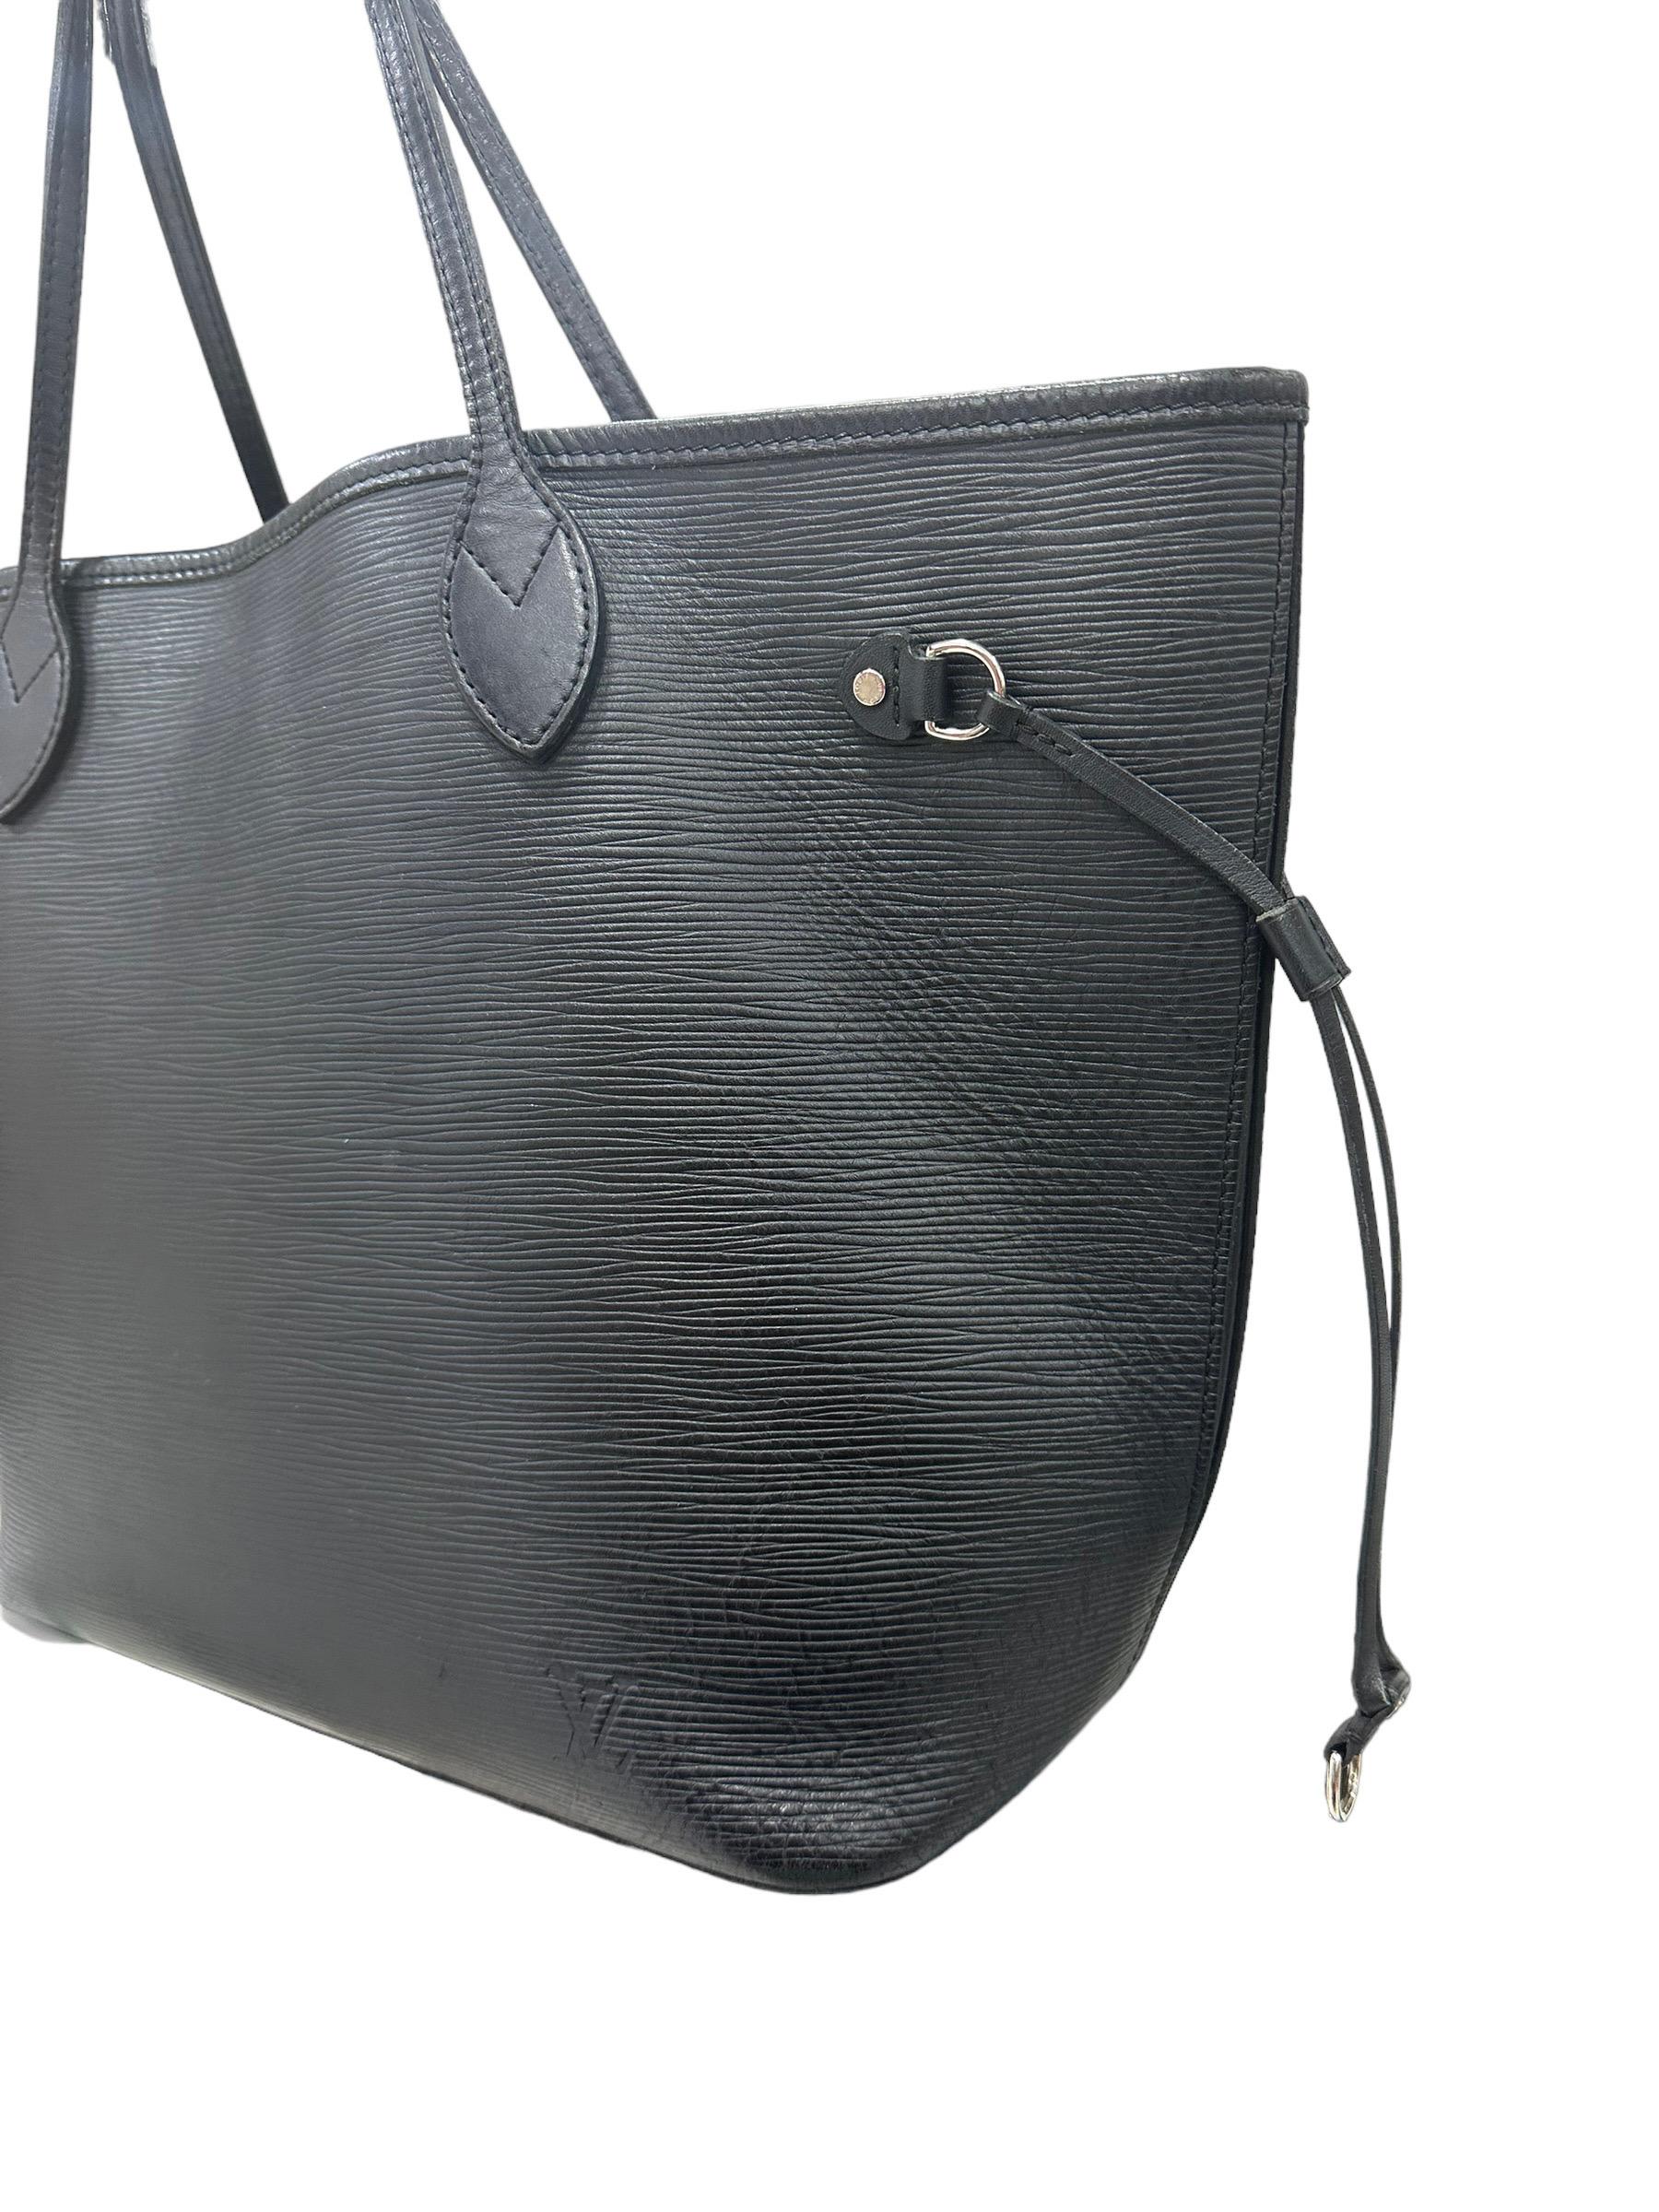 Women's Louis Vuitton Neverfull MM Black Epi Leather Shoulder Bag